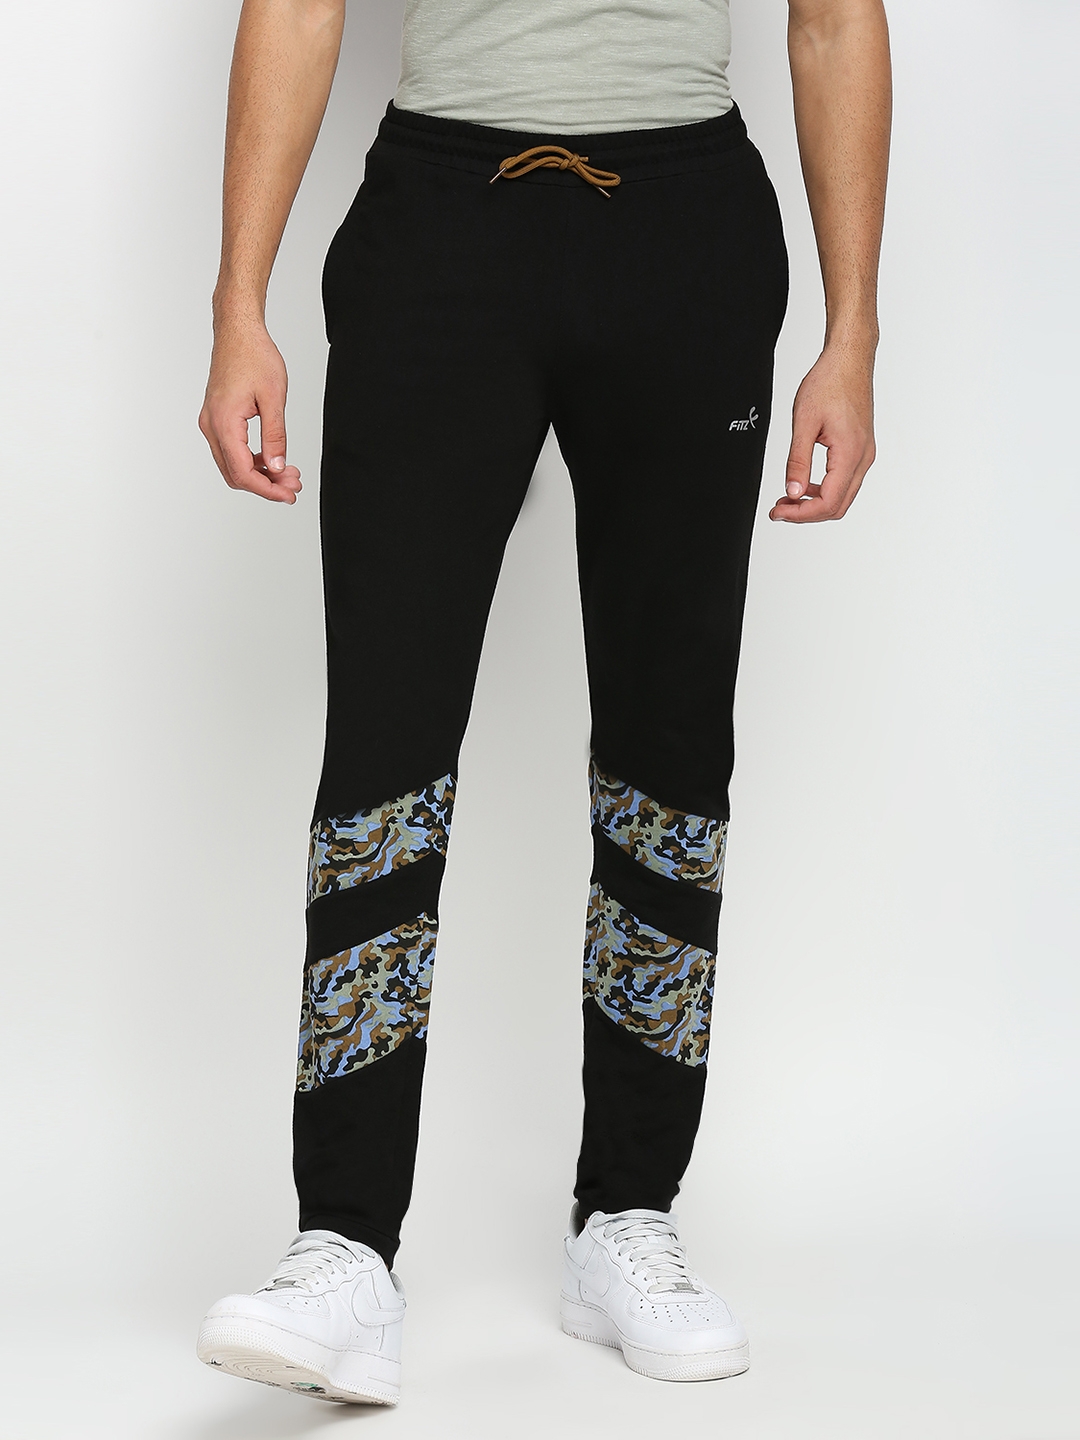 FITZ | Fitz Solids Cotton Blend Regular Fit Track Pants - Black Camo